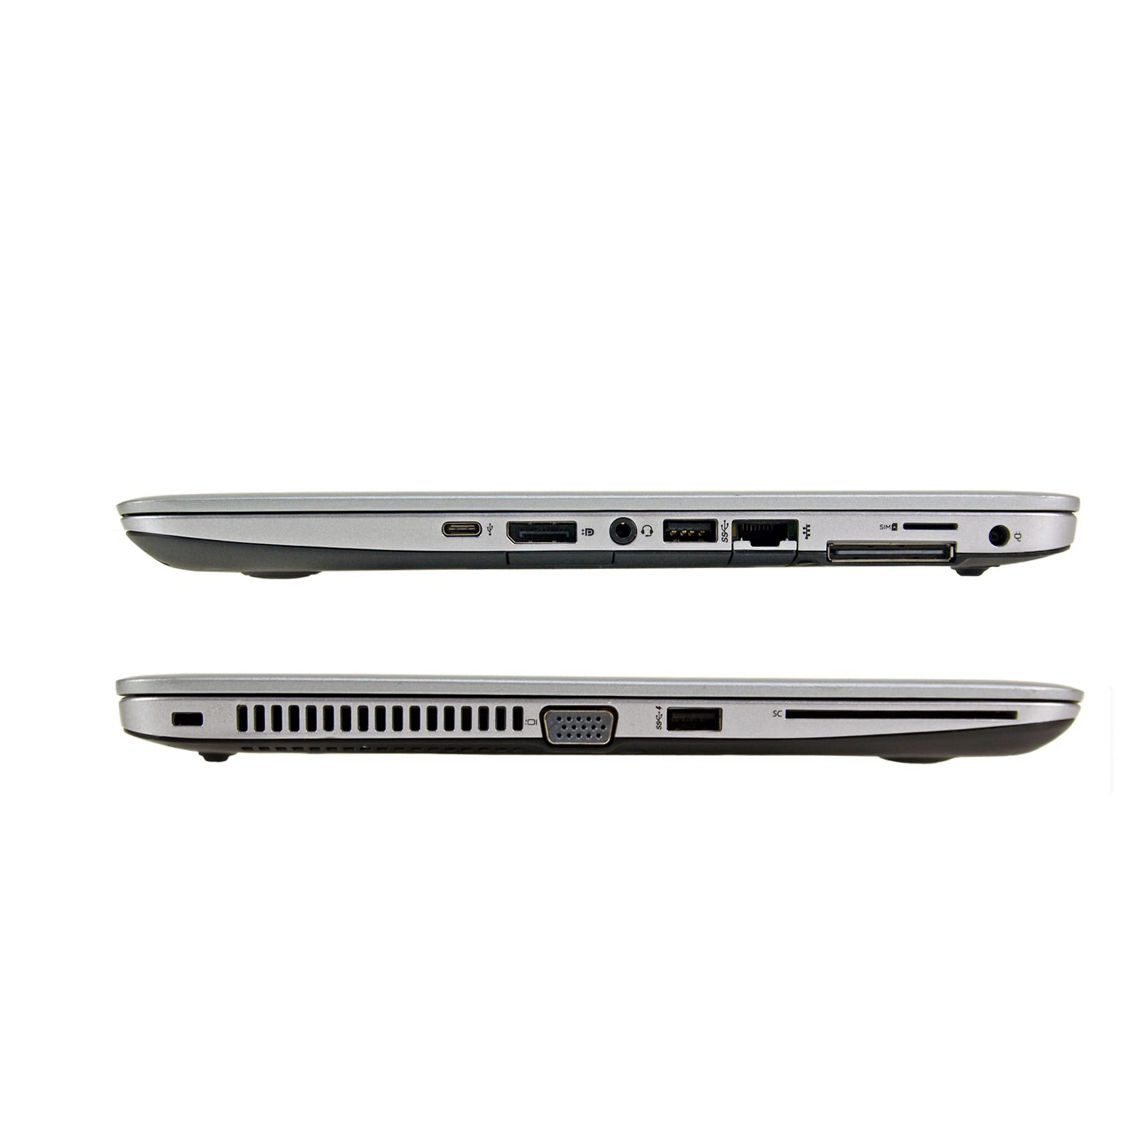 HP 840 G3 Core i5-6300U 2.4GHz 8GB Ram 256GB SSD Laptop (Refurbished) - Image 3 of 4